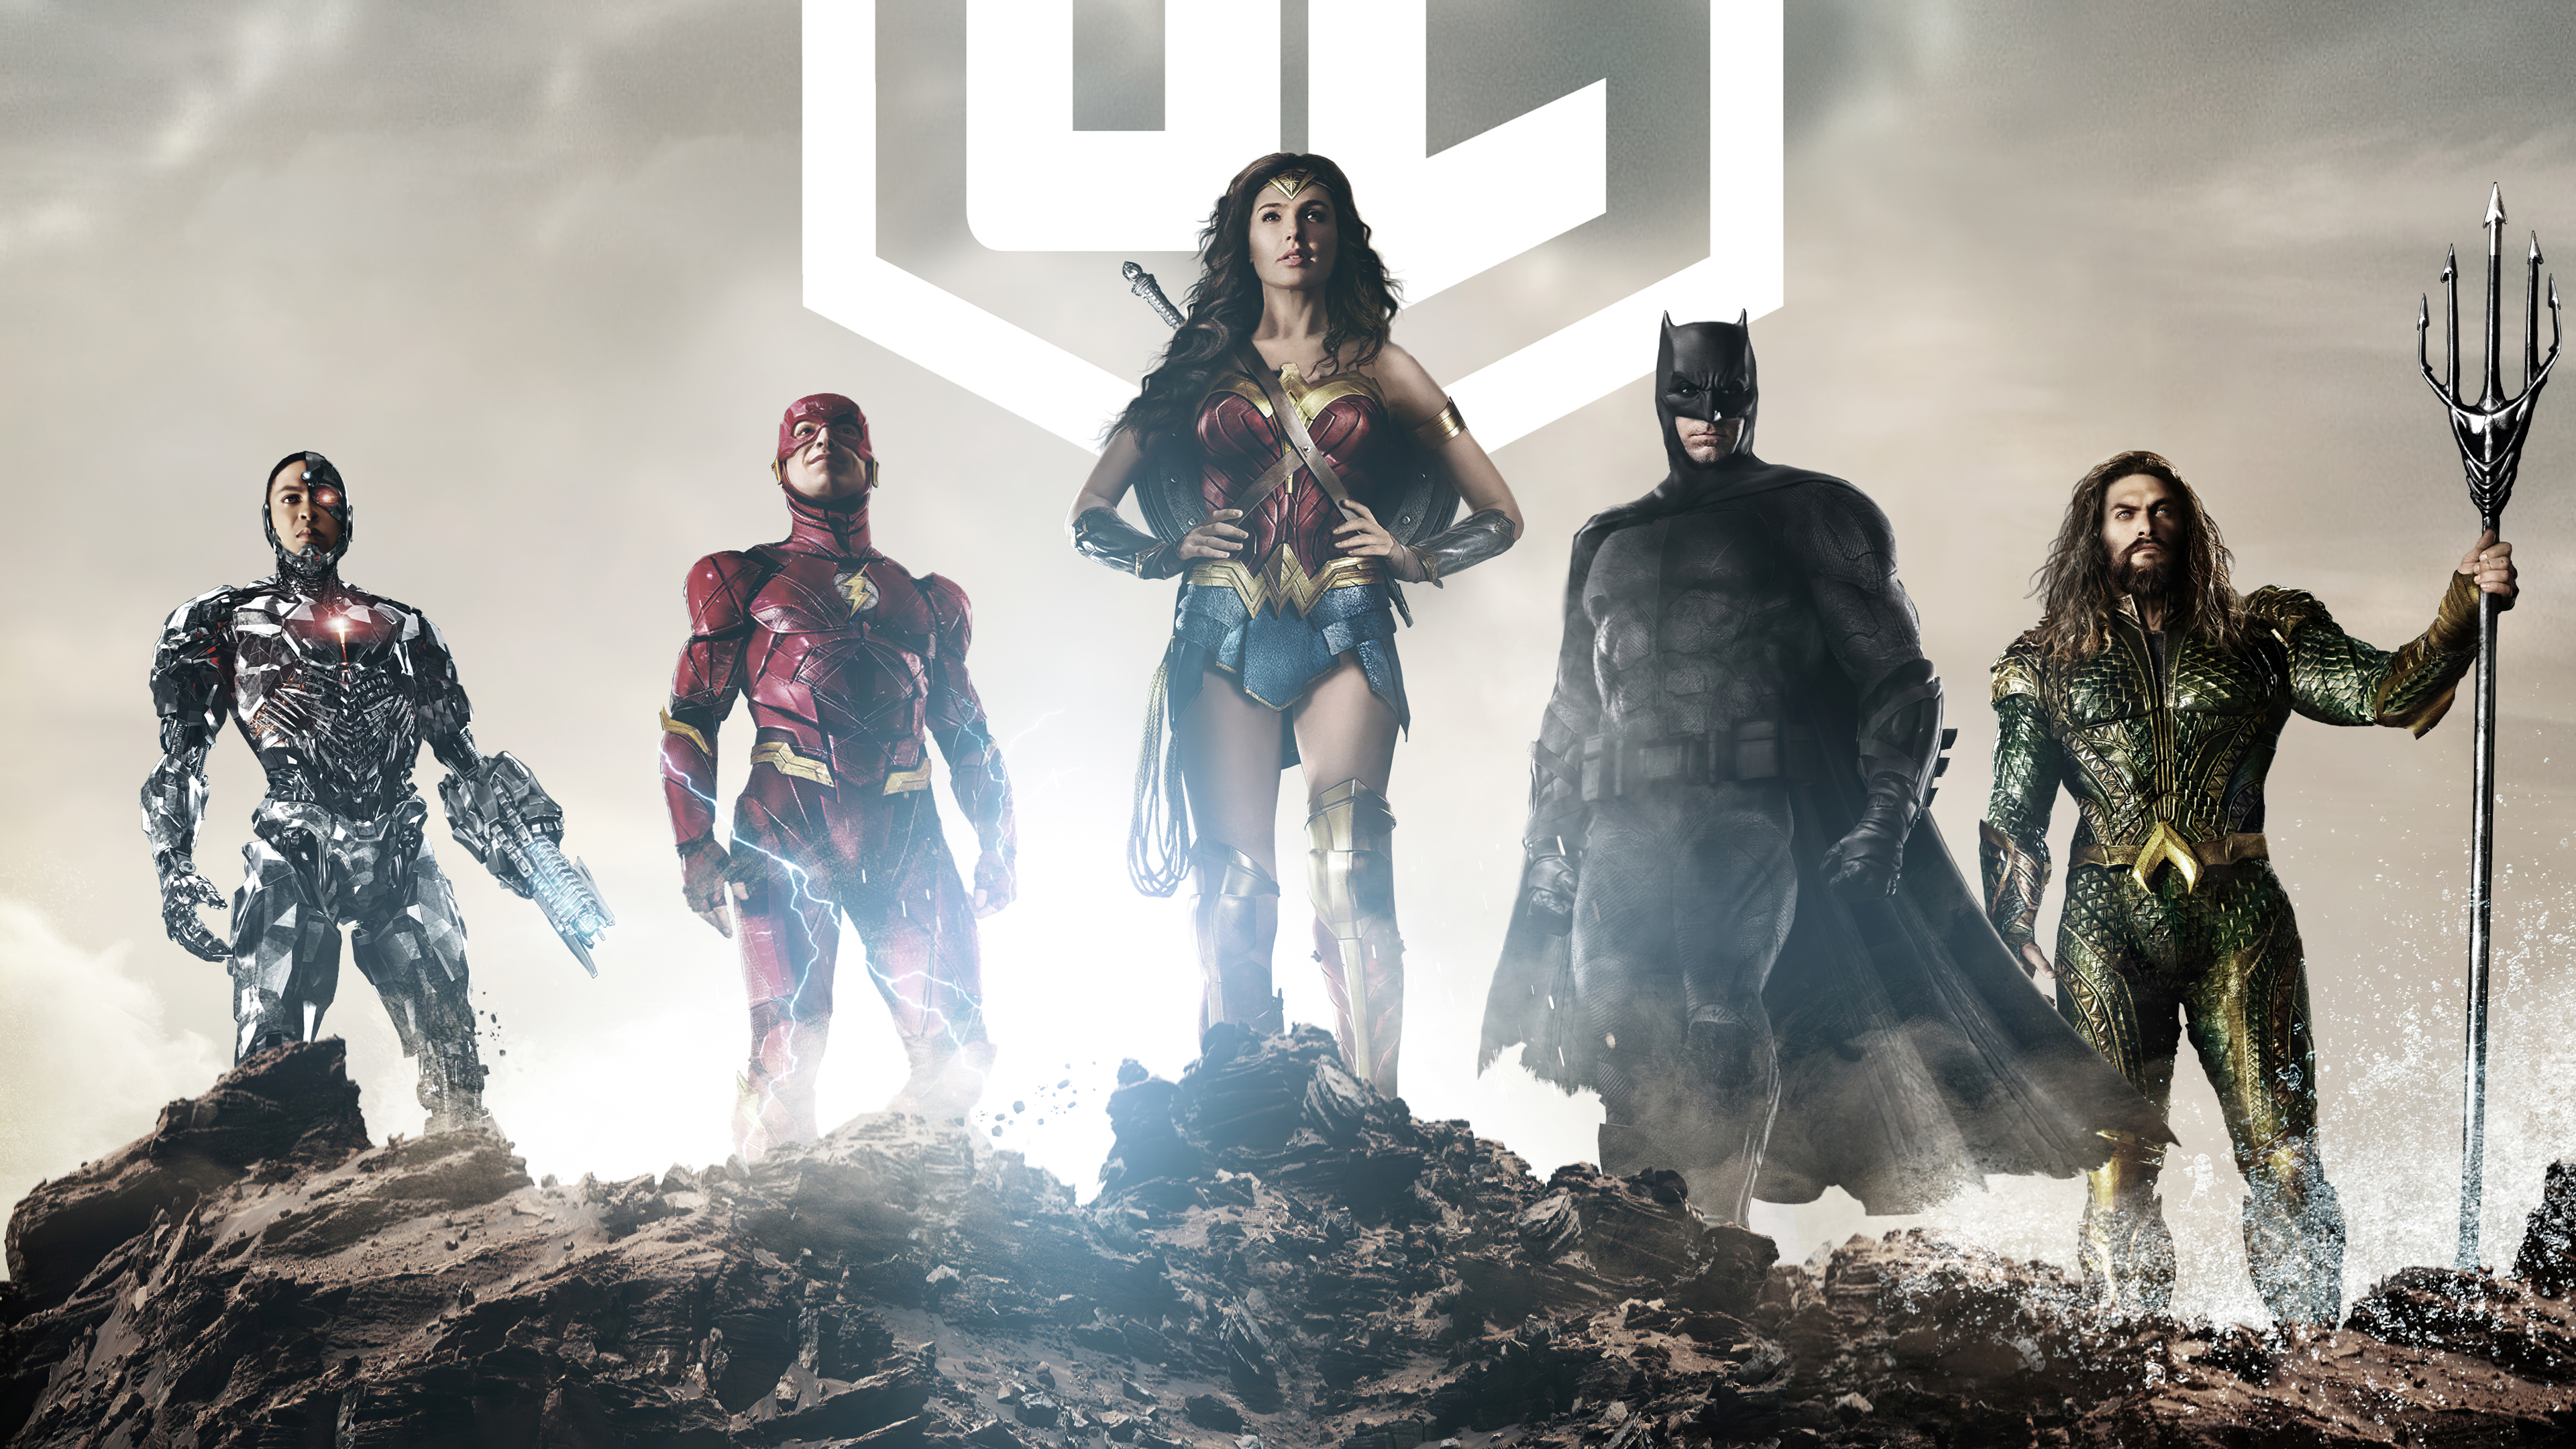 Handy-Wallpaper Batman, Blinken, Filme, Aquaman, Wonderwoman, Cyborg (Dc Comics), Justice League, Zack Snyder: Justice League kostenlos herunterladen.